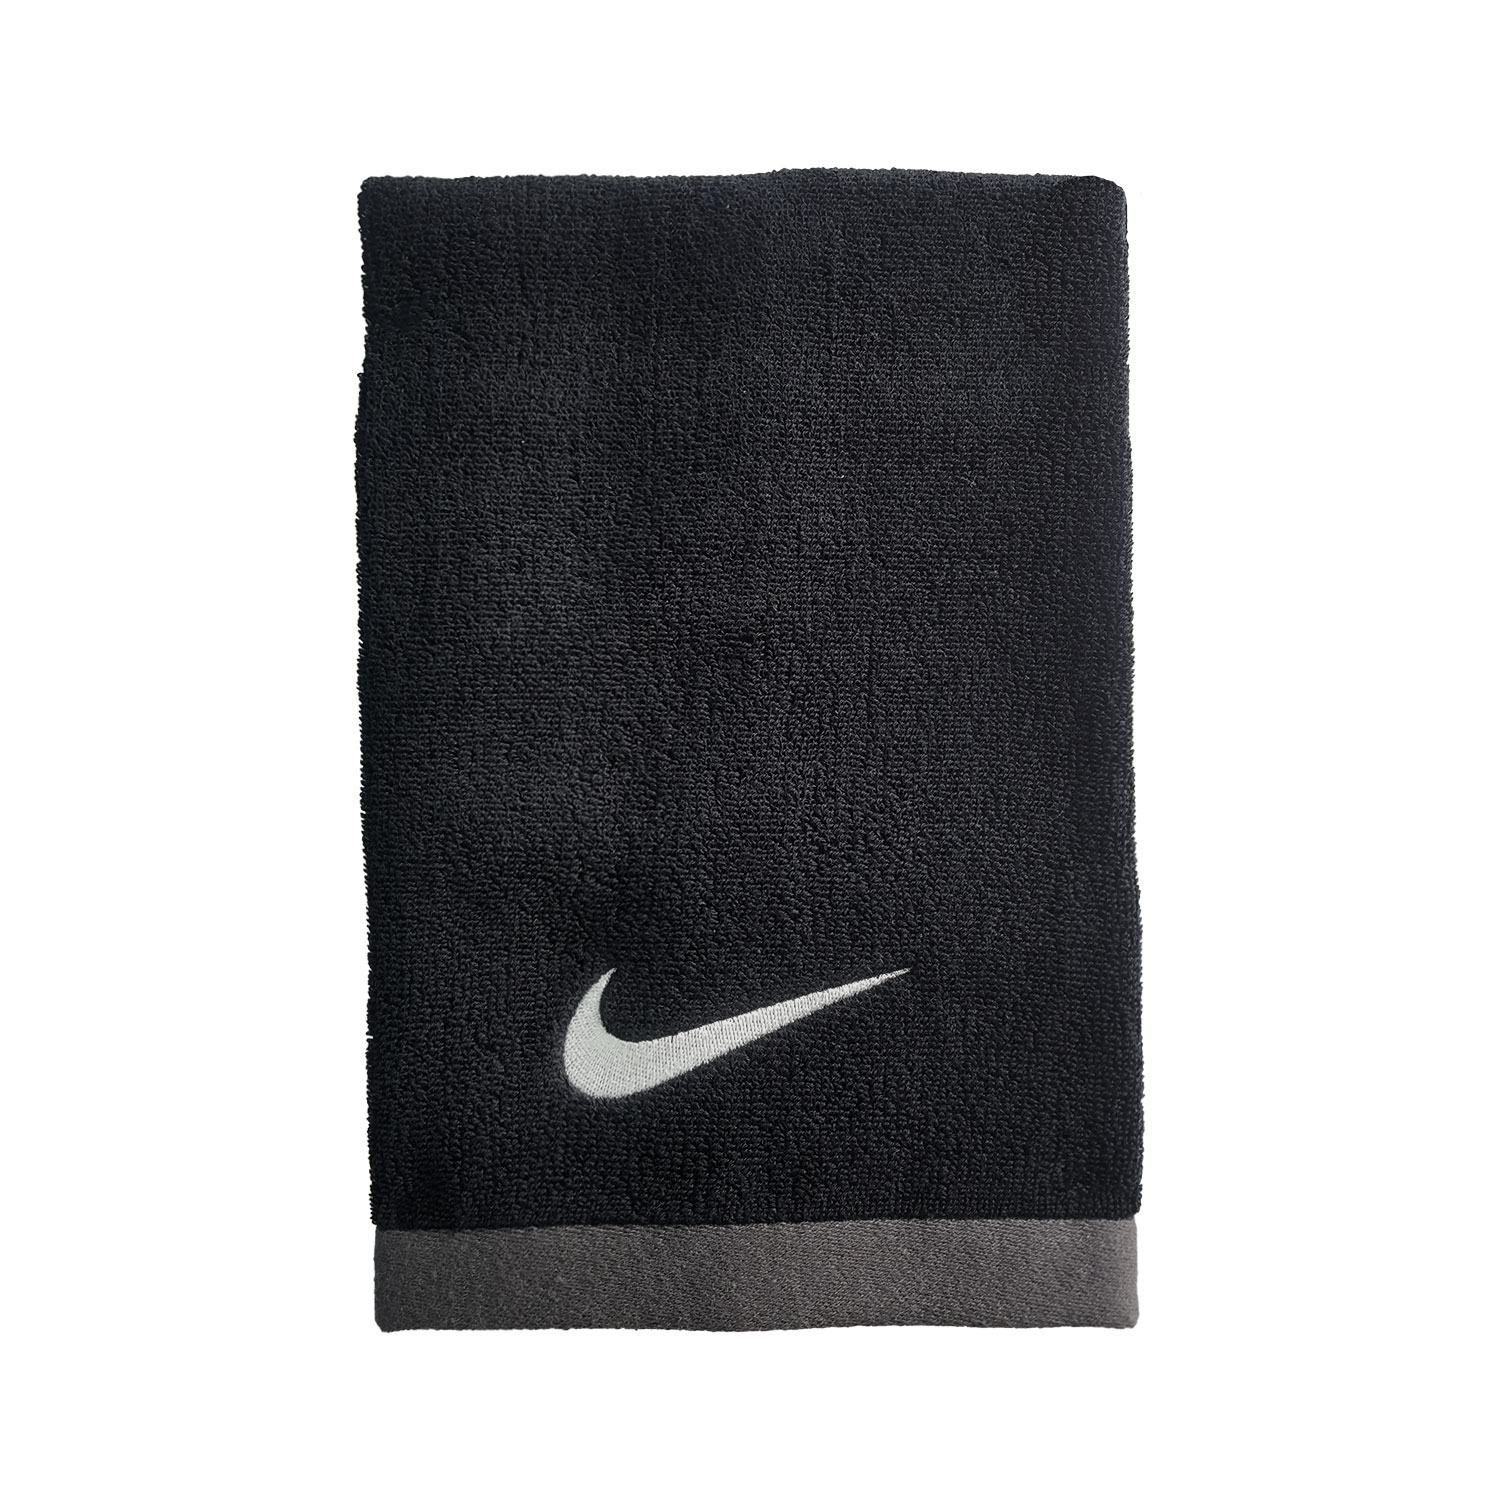 Nike Fundamental Towel - Black/White